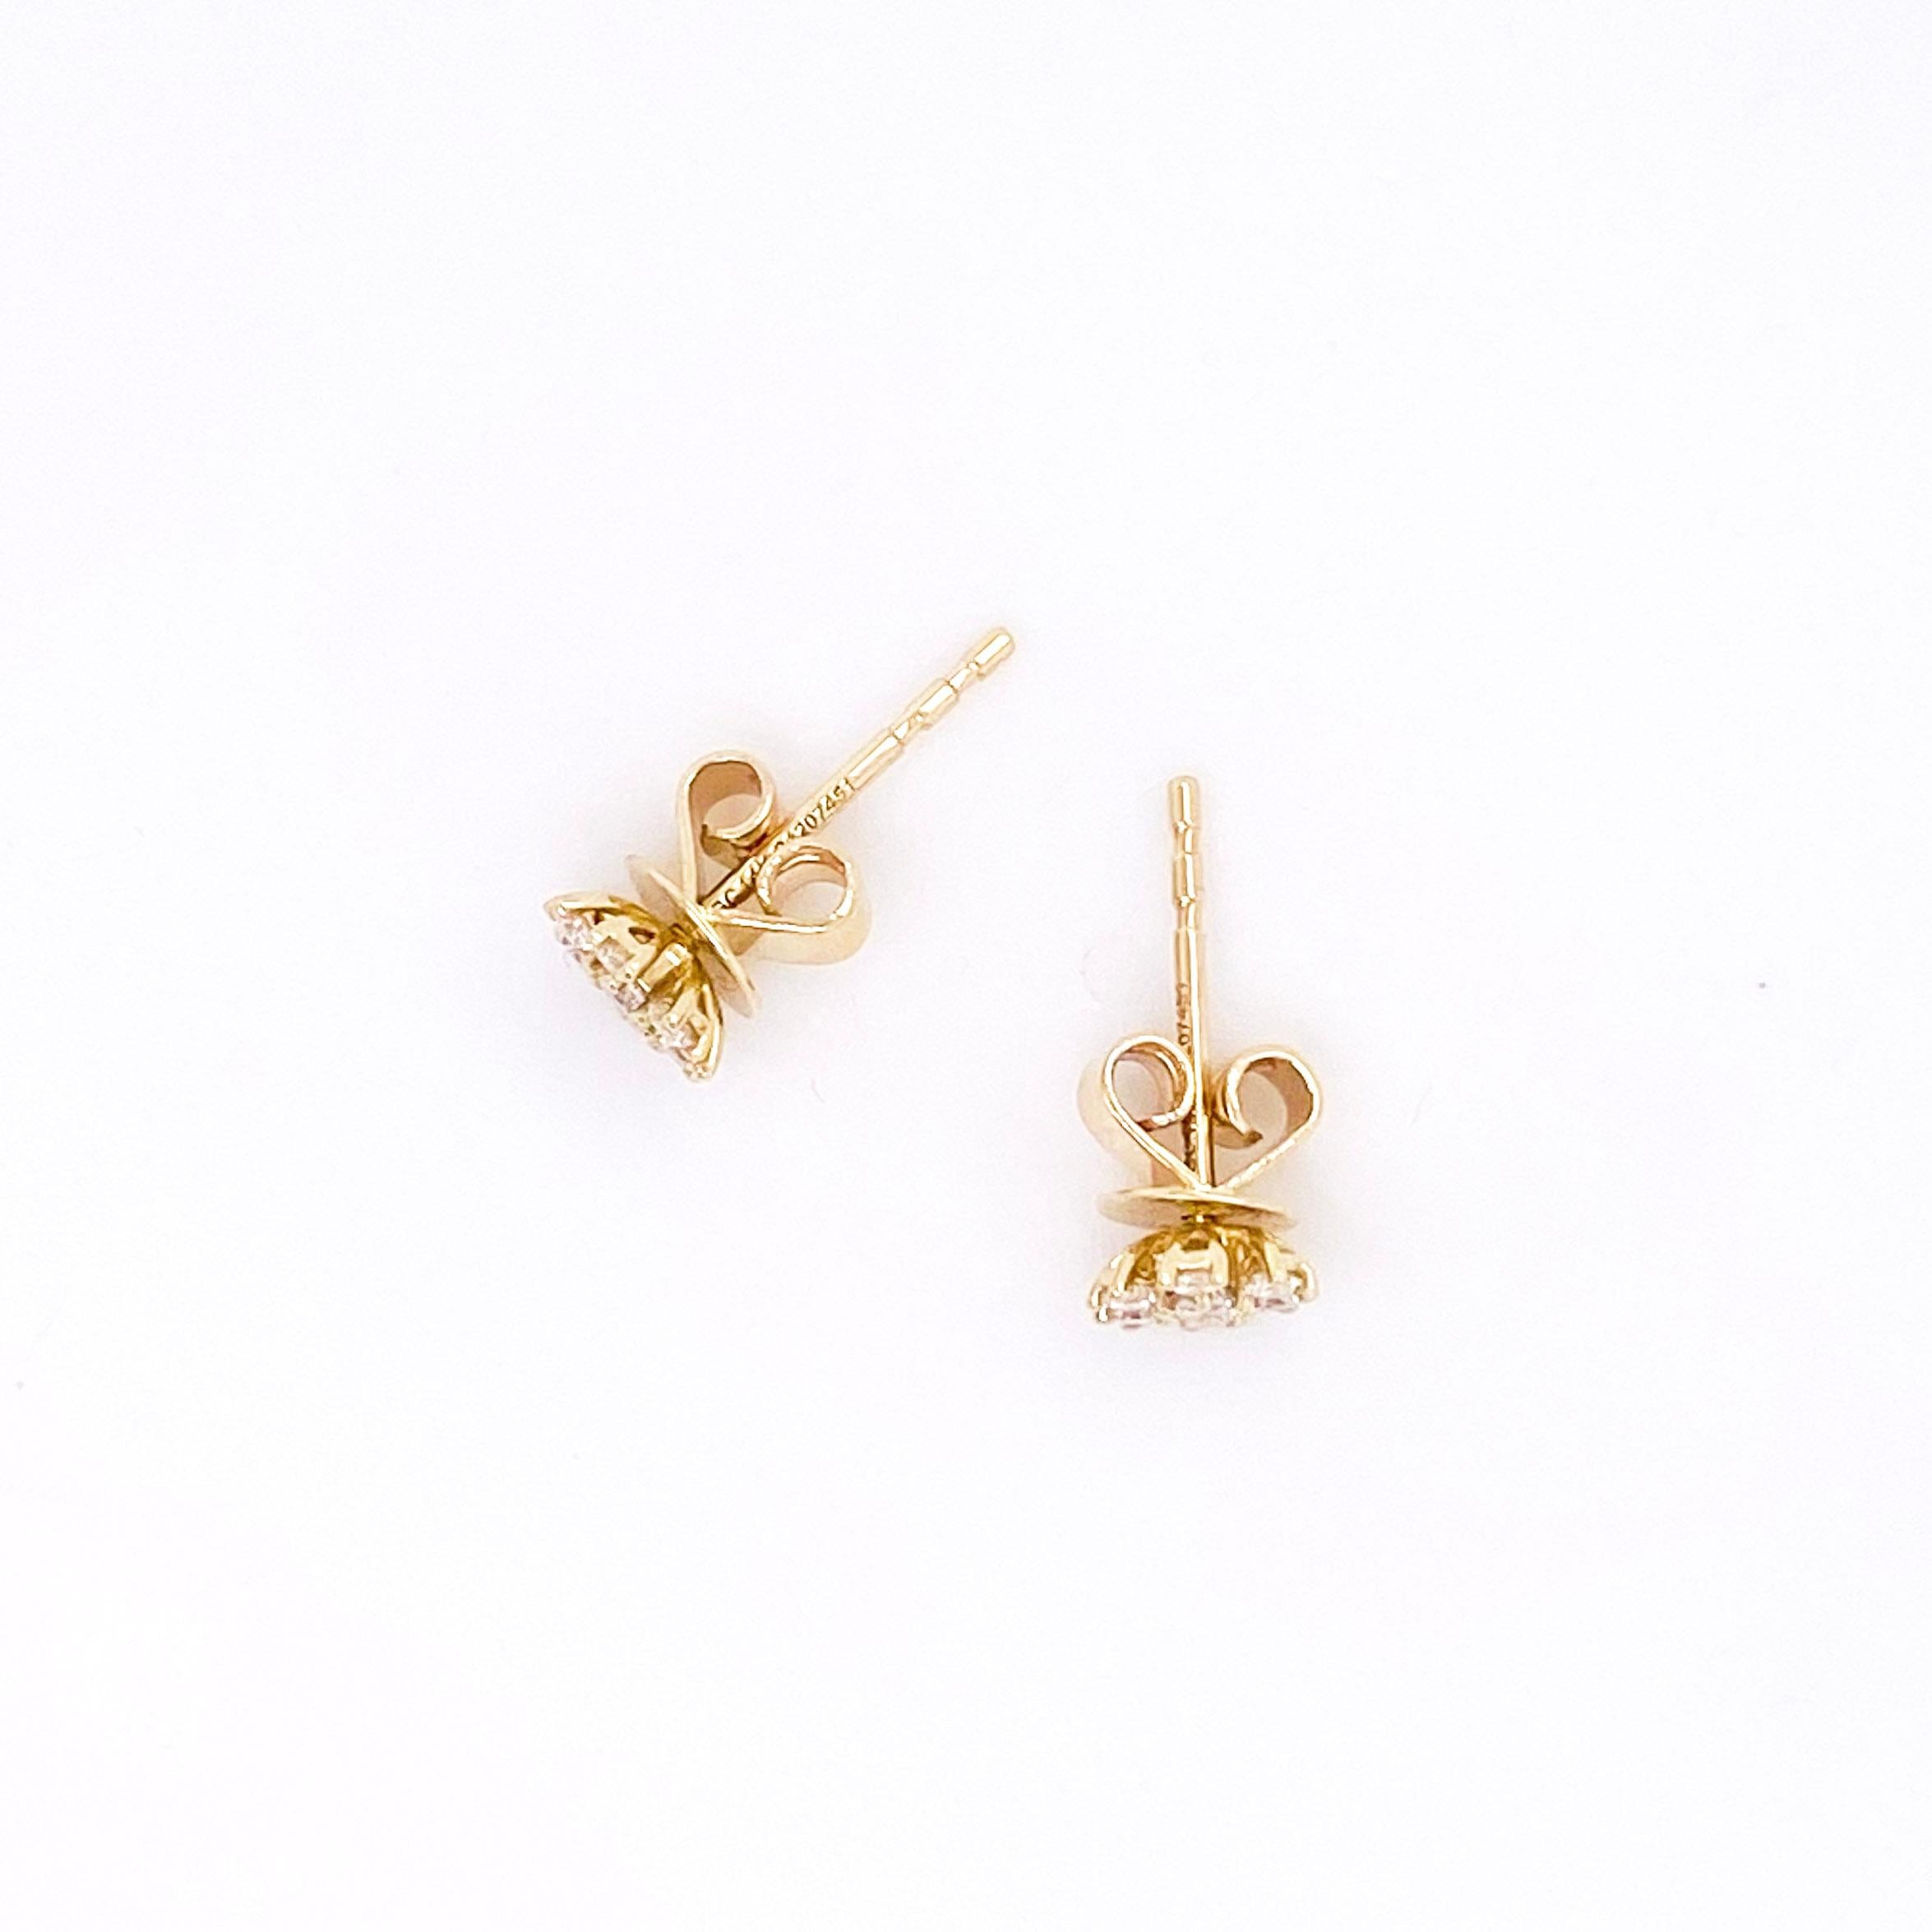 Round Cut Diamond Stud Earrings, 14K Yellow Gold Diamond Earrings, Flower Diamond Cluster